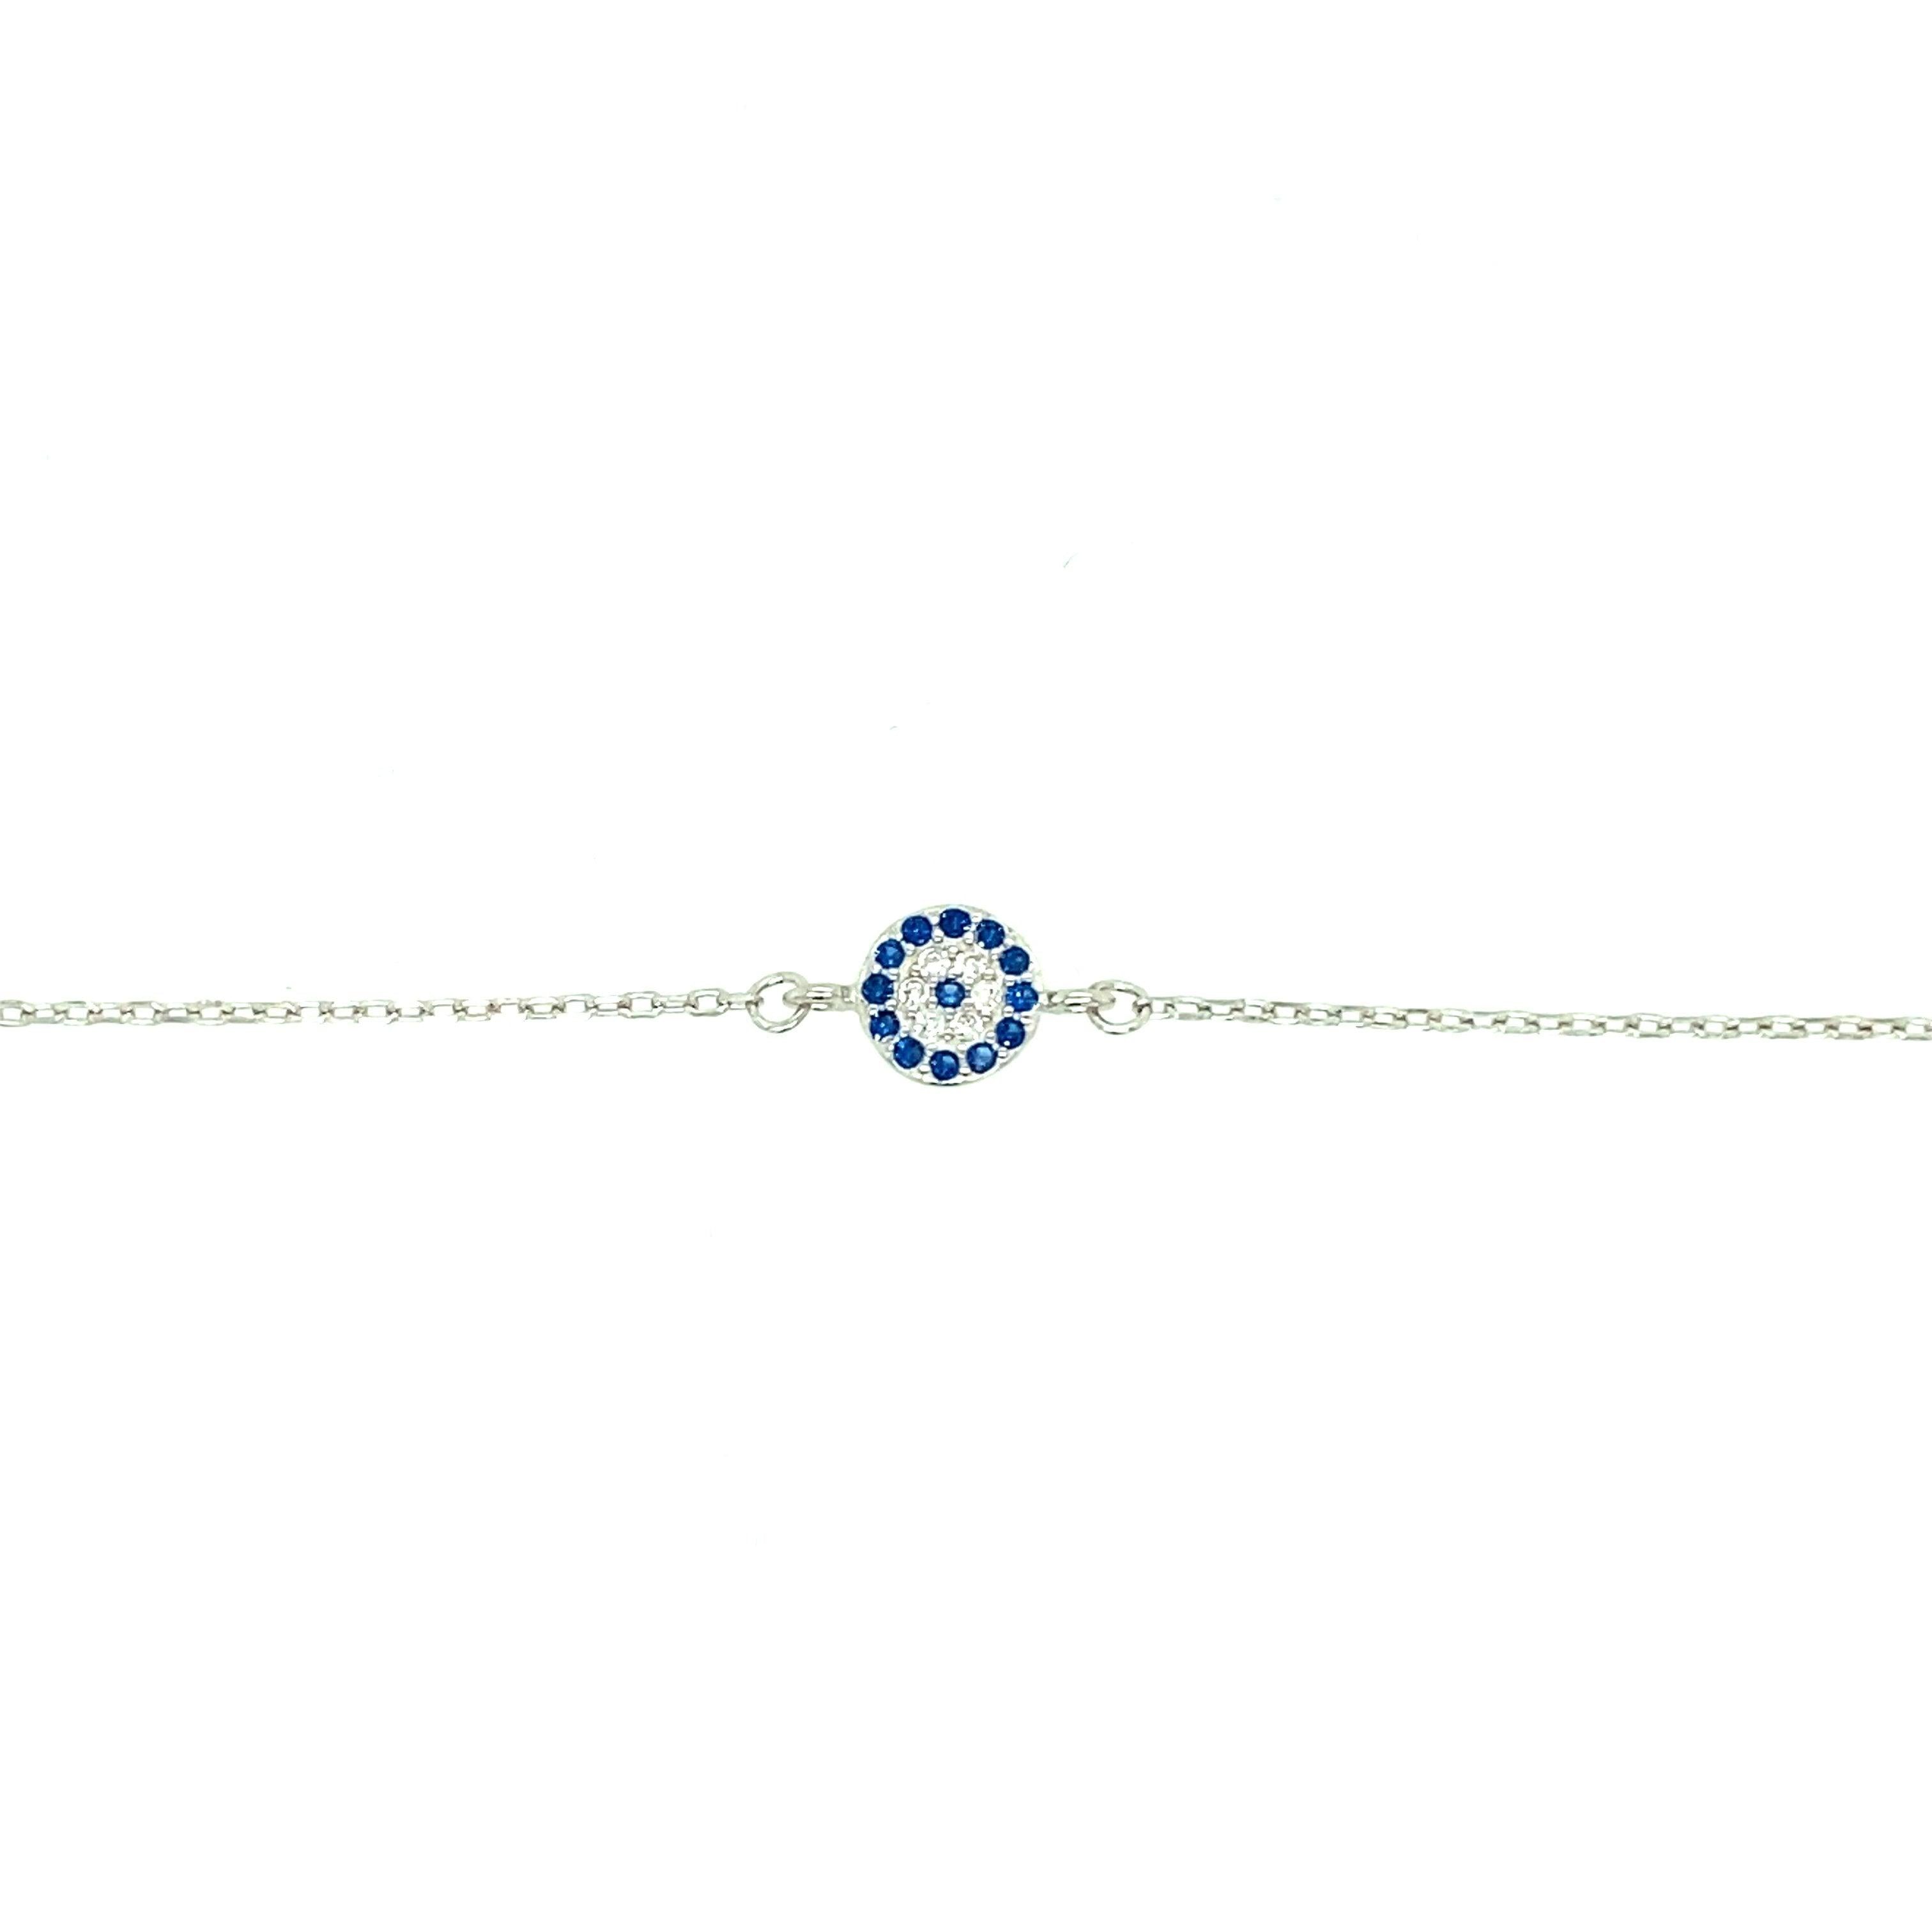 Bracelet b1480-s - 925 Sterling Silver - Asfour Crystal